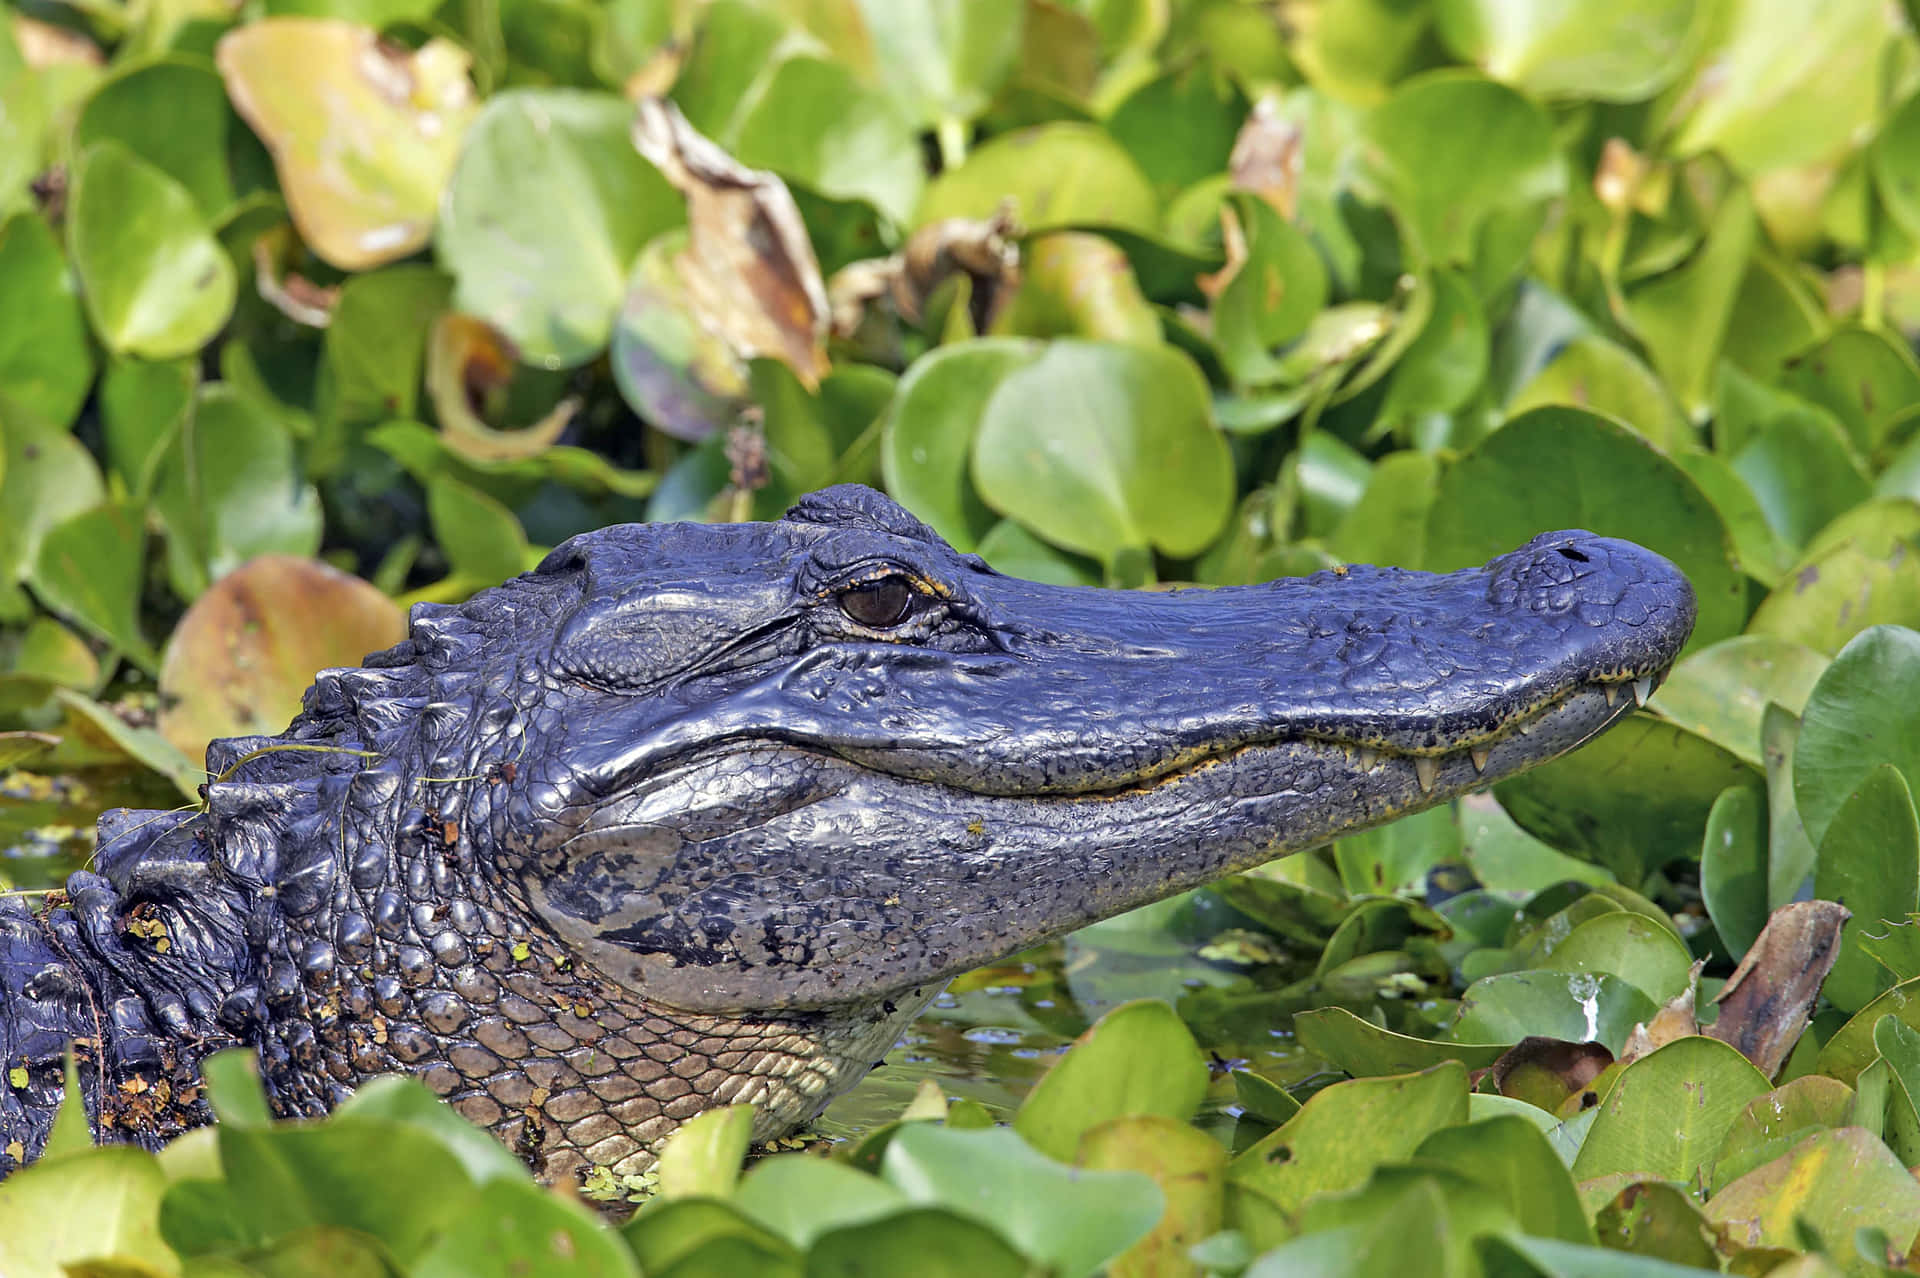 Close up image of a Large Alligator